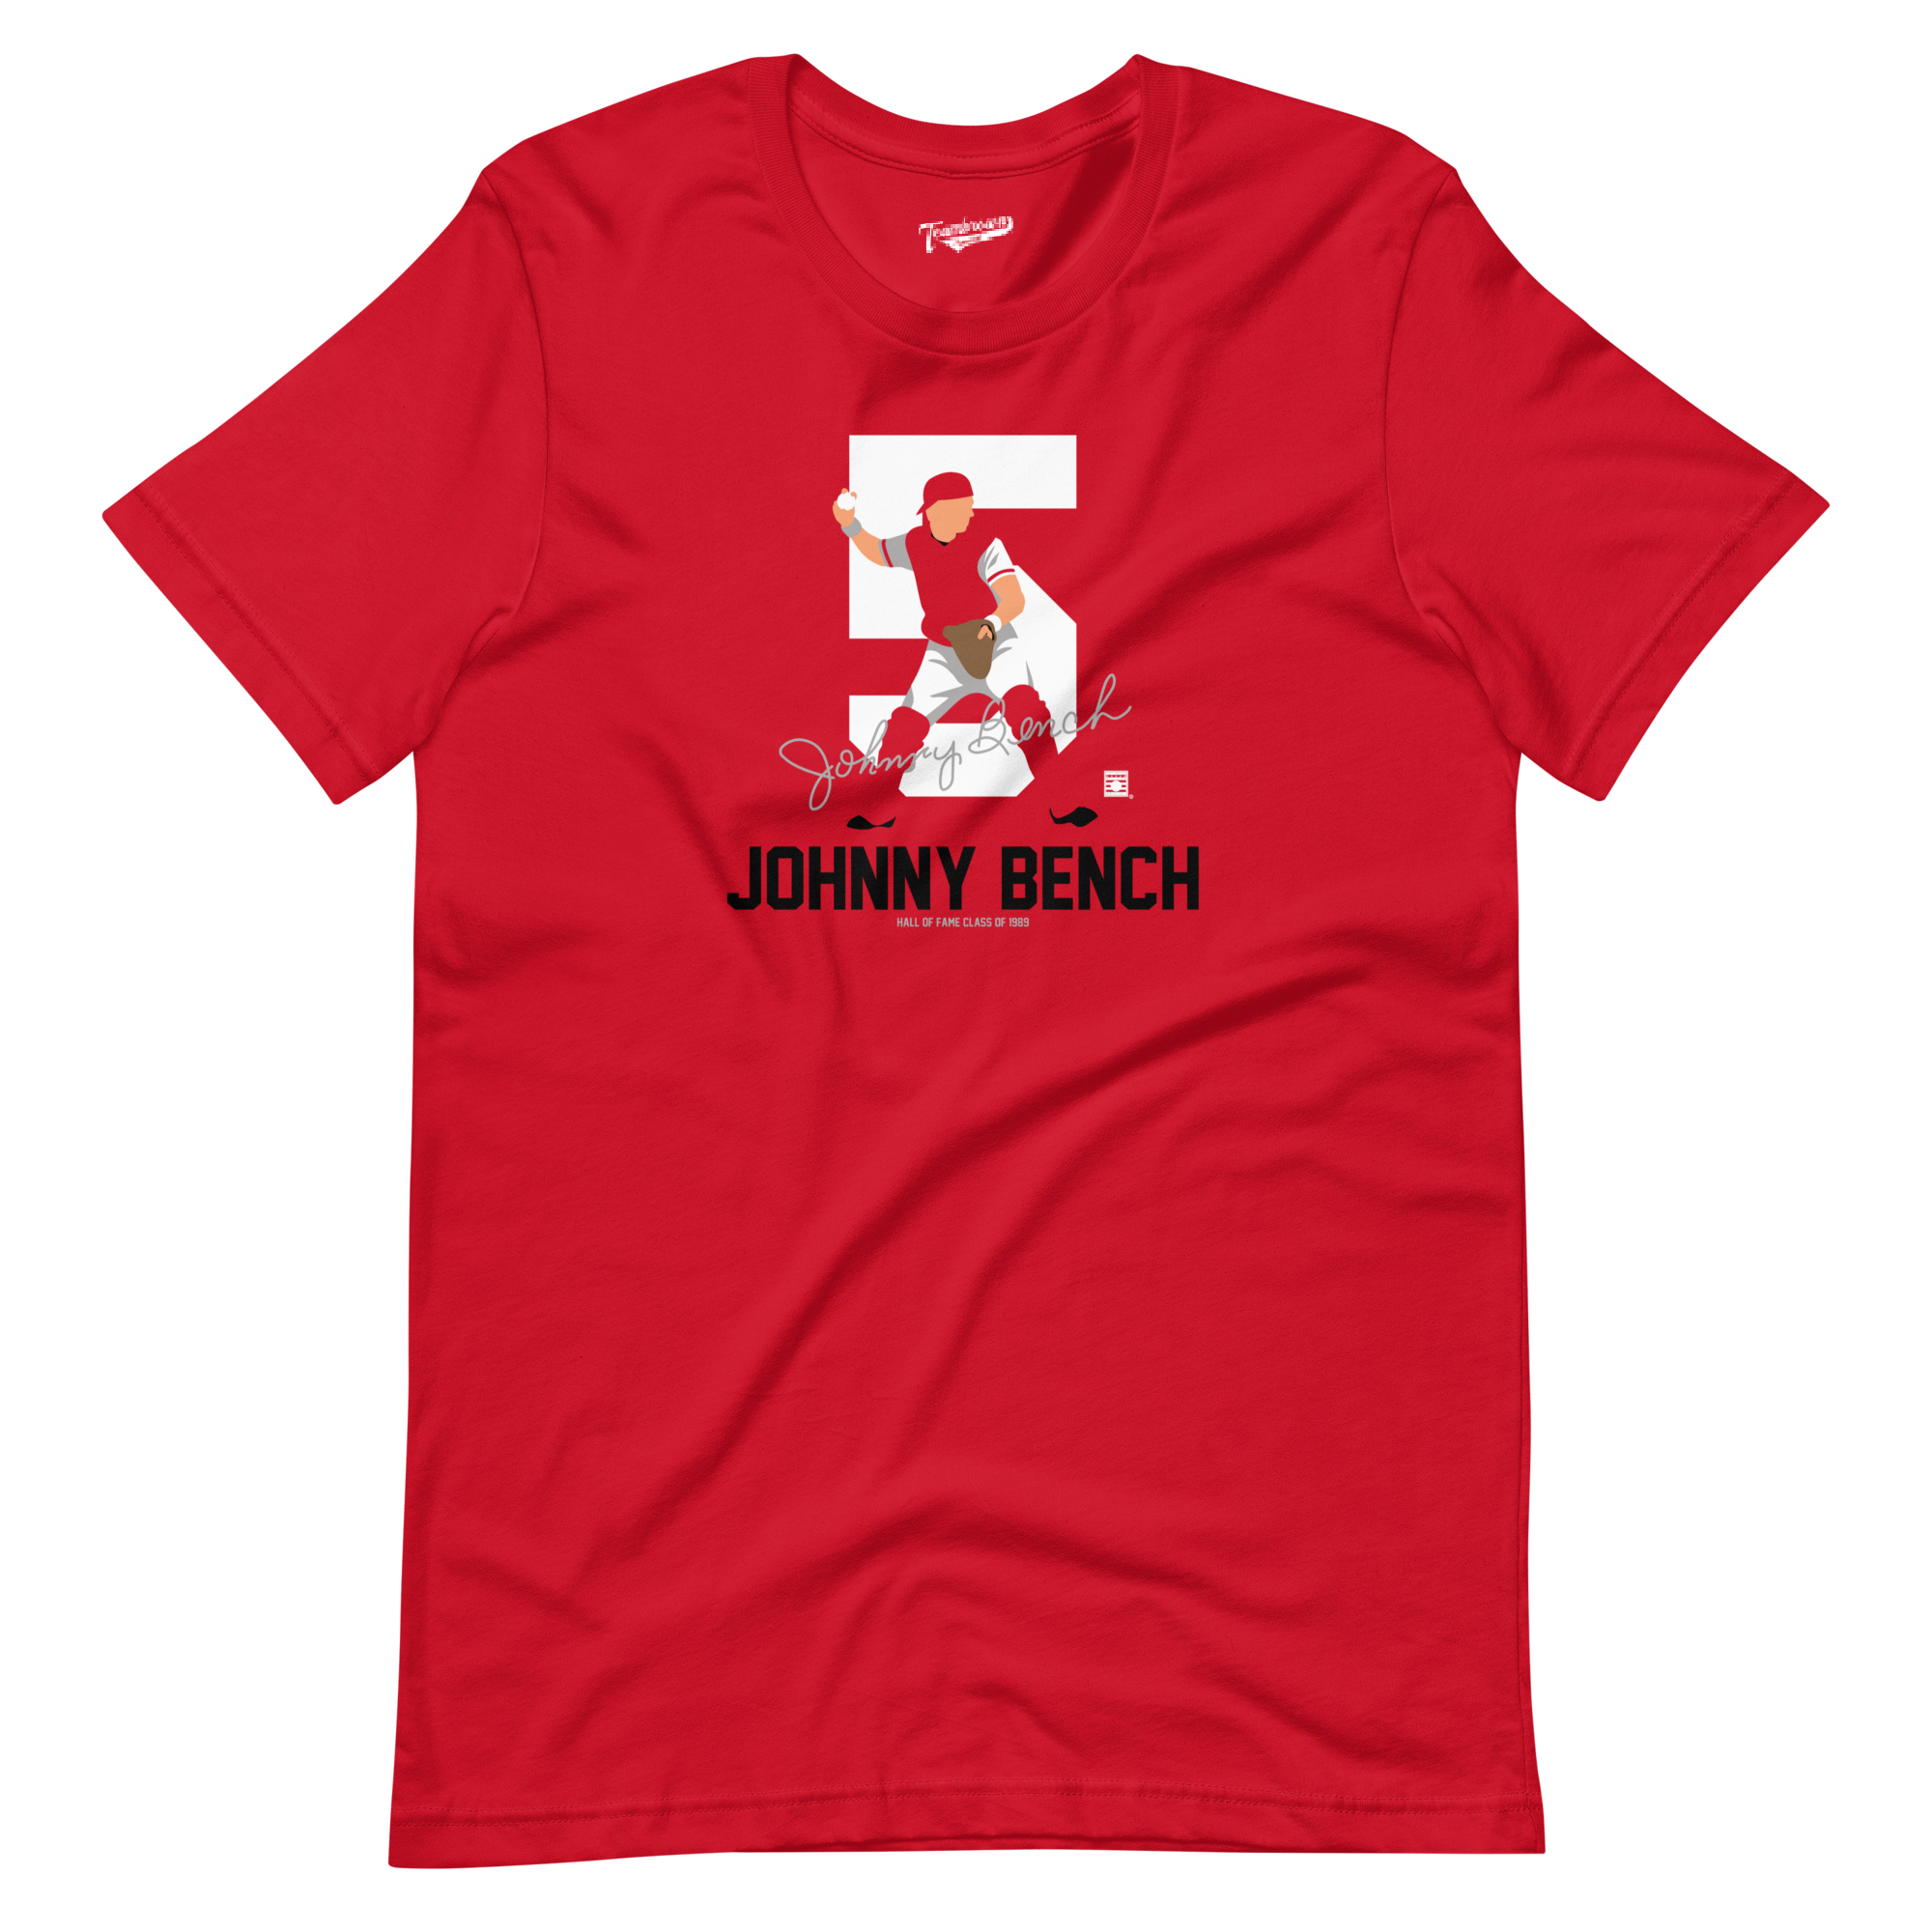 Johnny Bench - Catcher, Baseball Hall of Fame